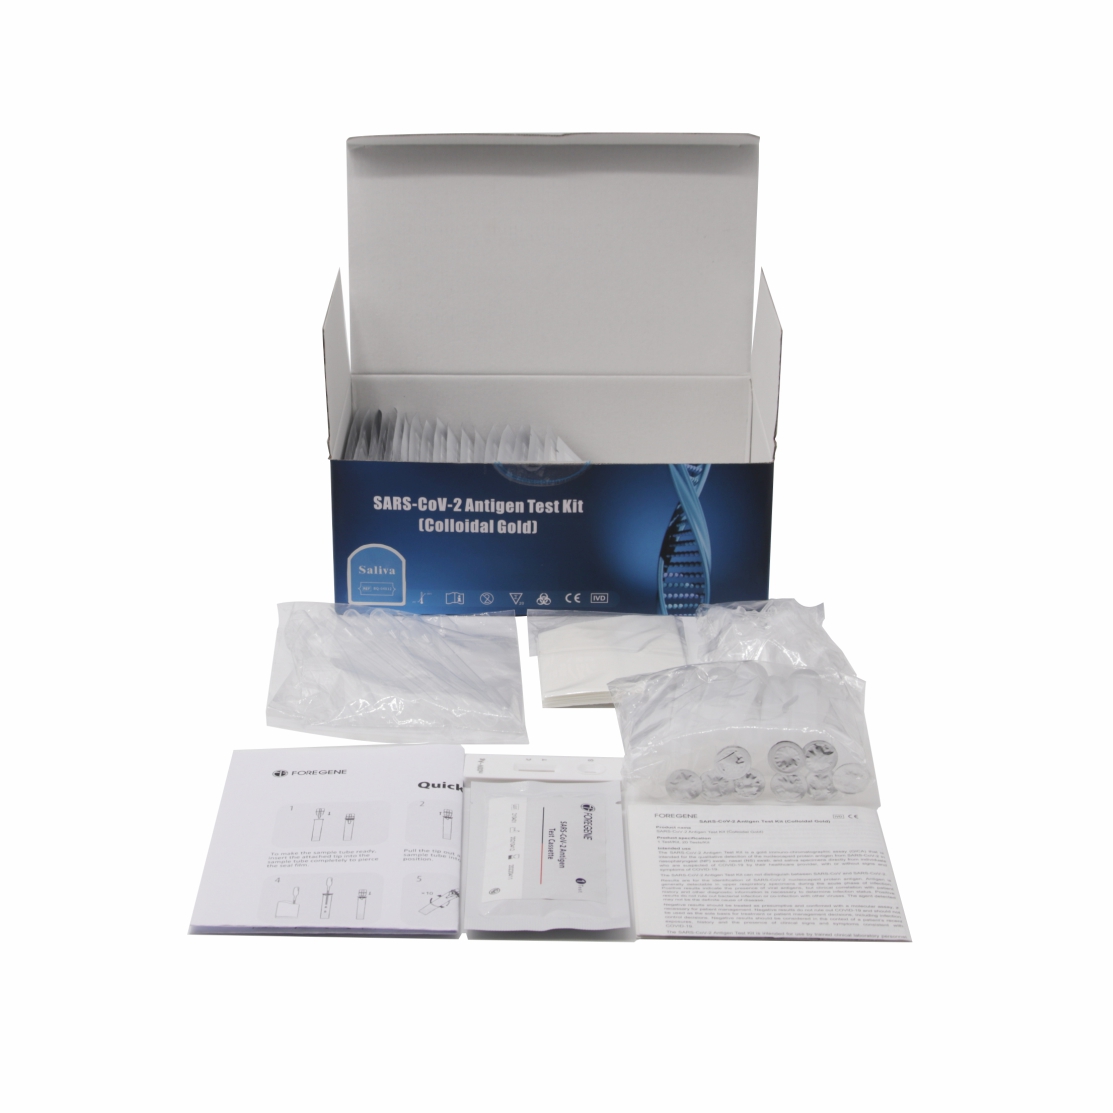 SARS-CoV-2 Antigen Test Kit (Koloida Oro) - Saliva Specimens